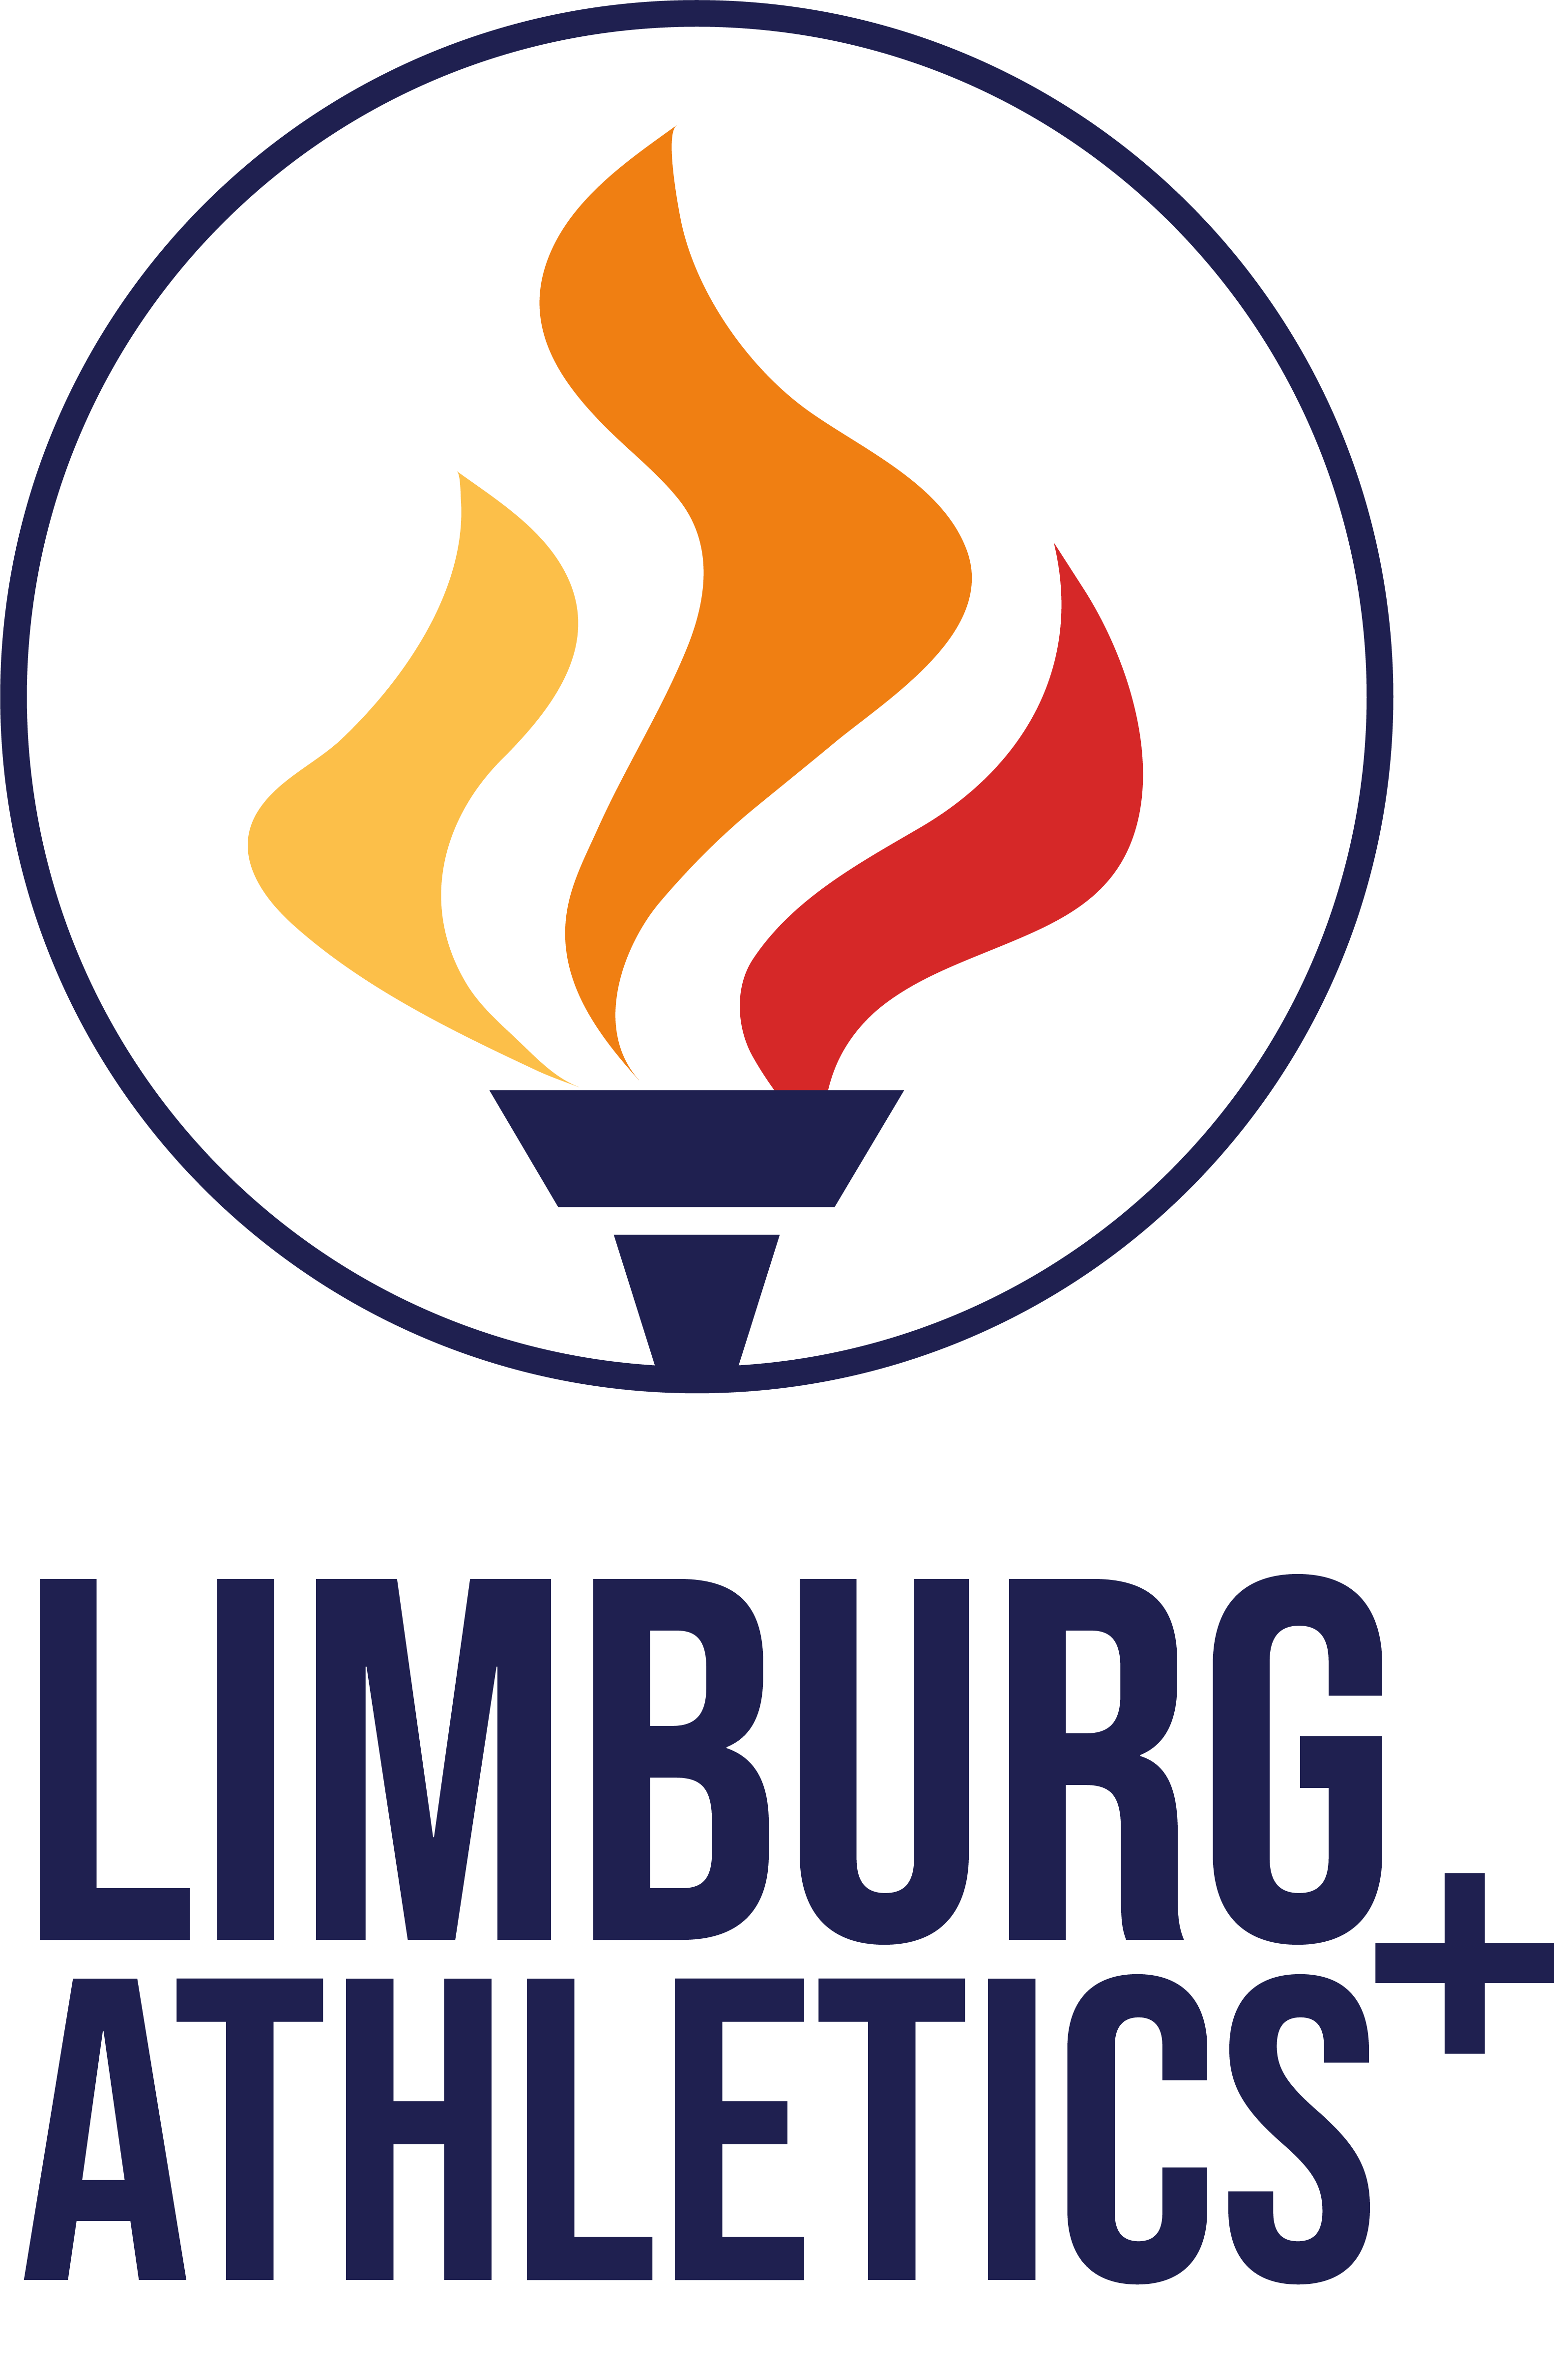 Logo Limburg Athletics+